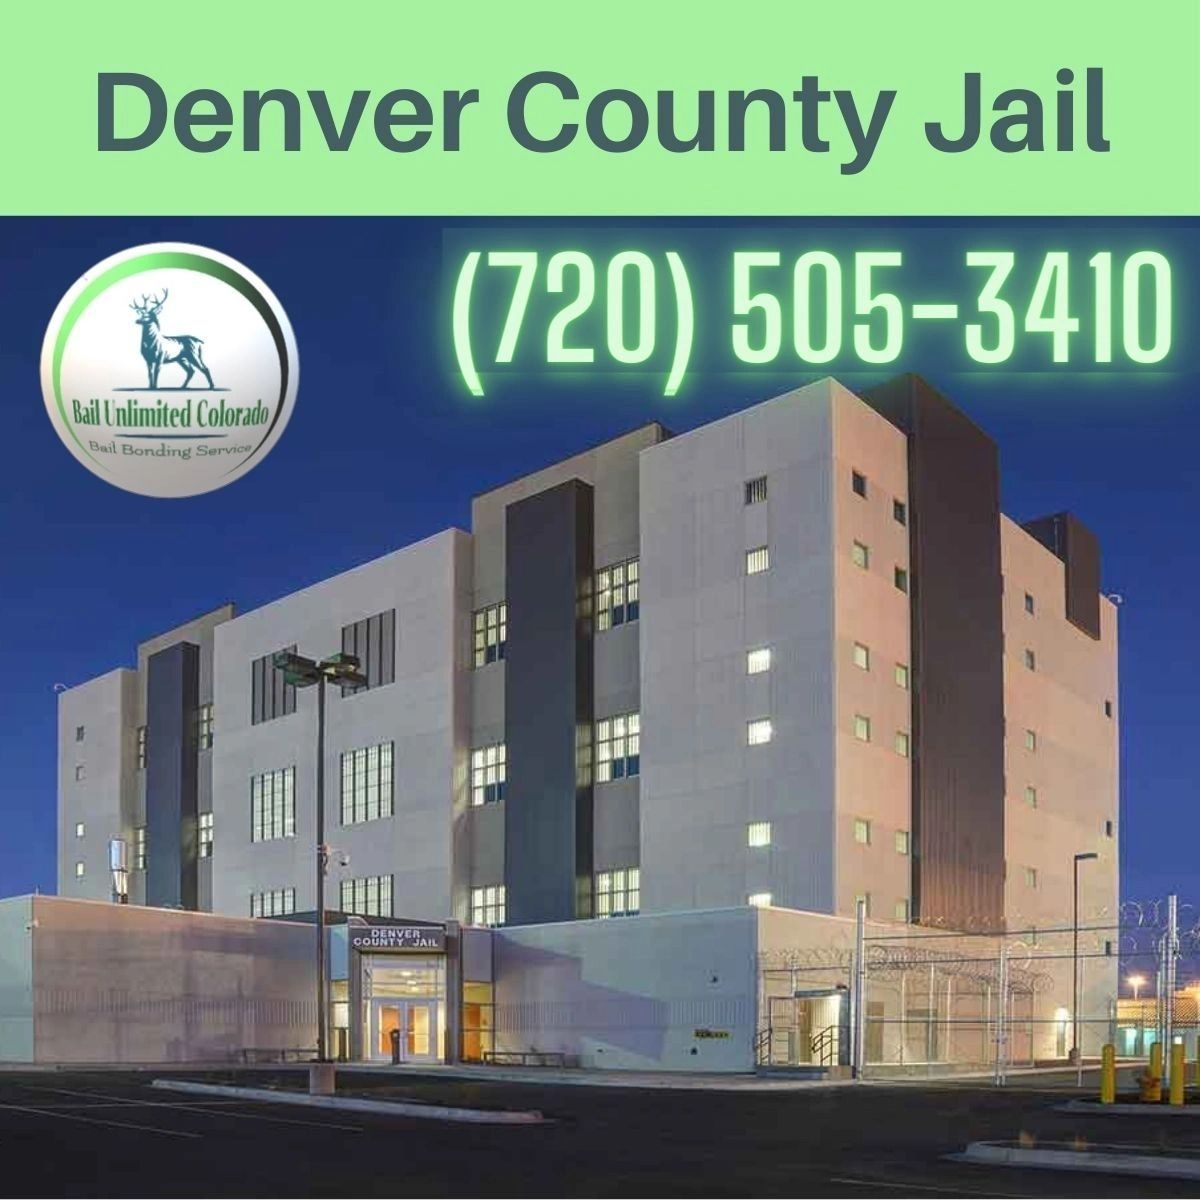 Denver County Jail Bail Unlimited Colorado LOGO (720) 505-3410 Bail Bonding Service Building Denver